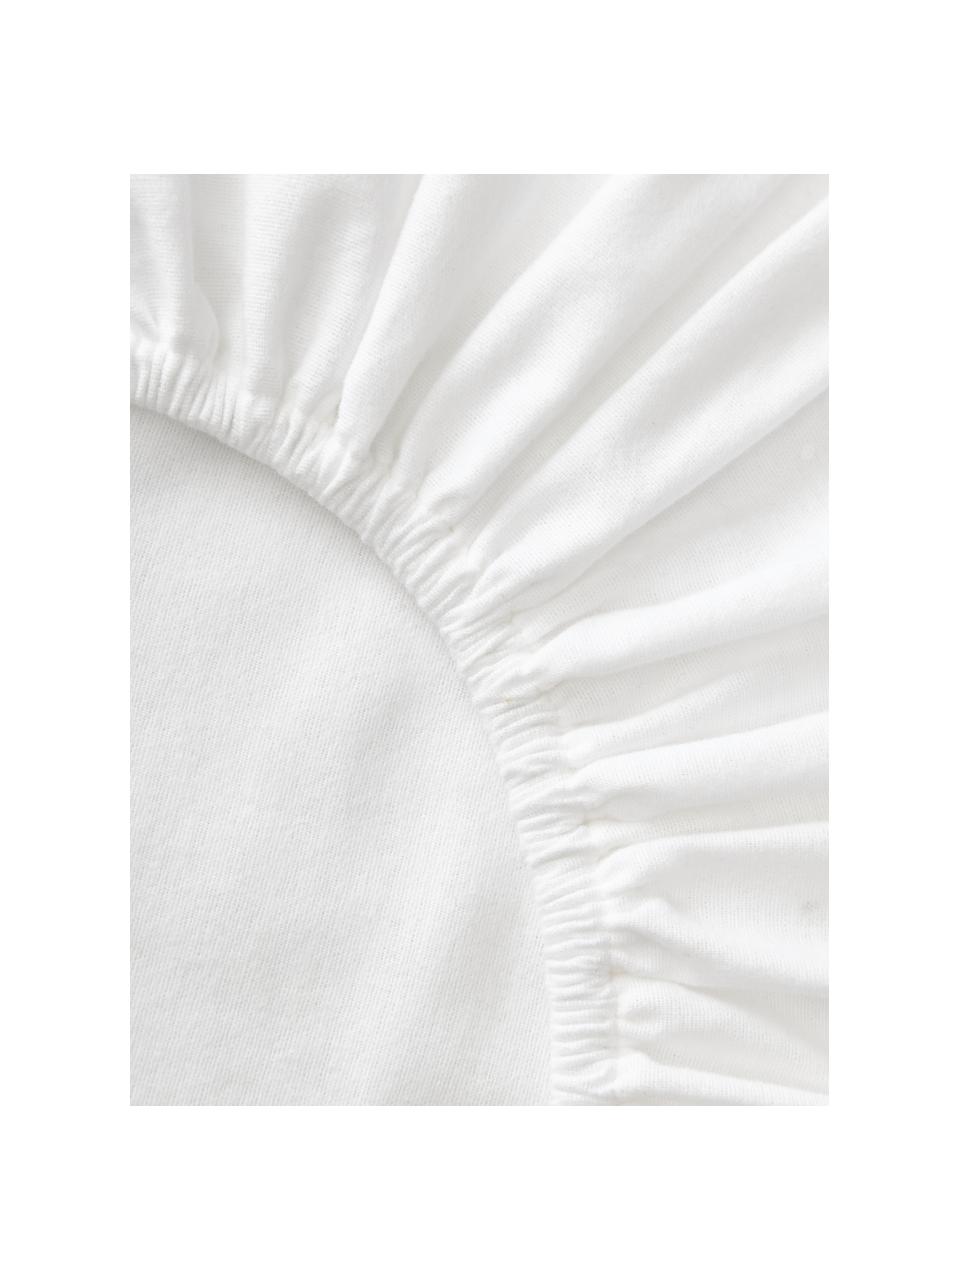 Sábana bajera cubrecolchón de franela Biba, Blanco, Cama 200 cm (200 x 200 x 15 cm)